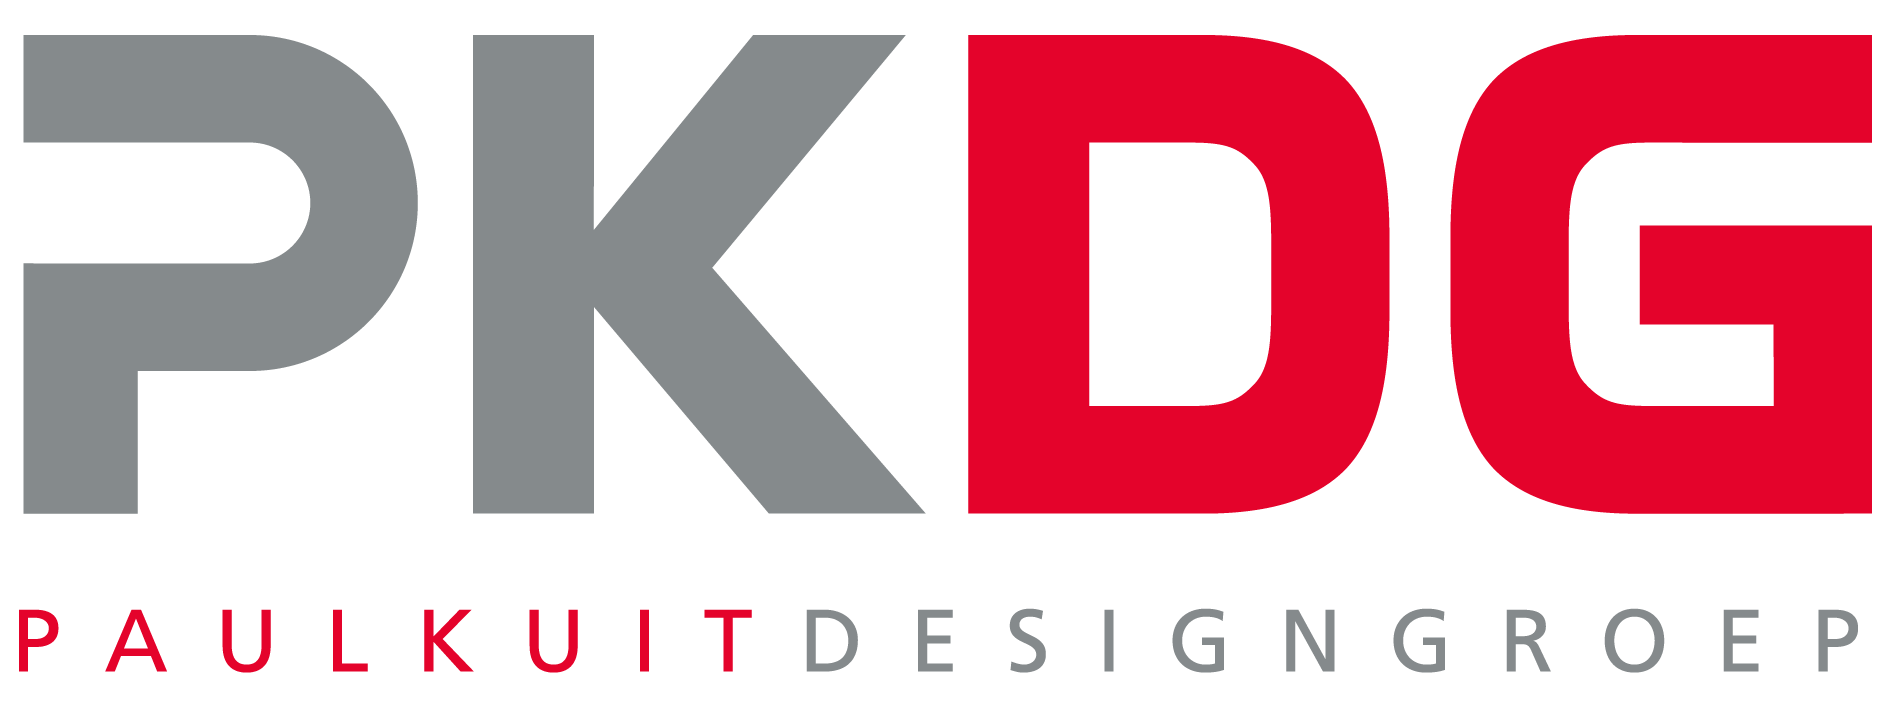 Paul Kuit Design Groep